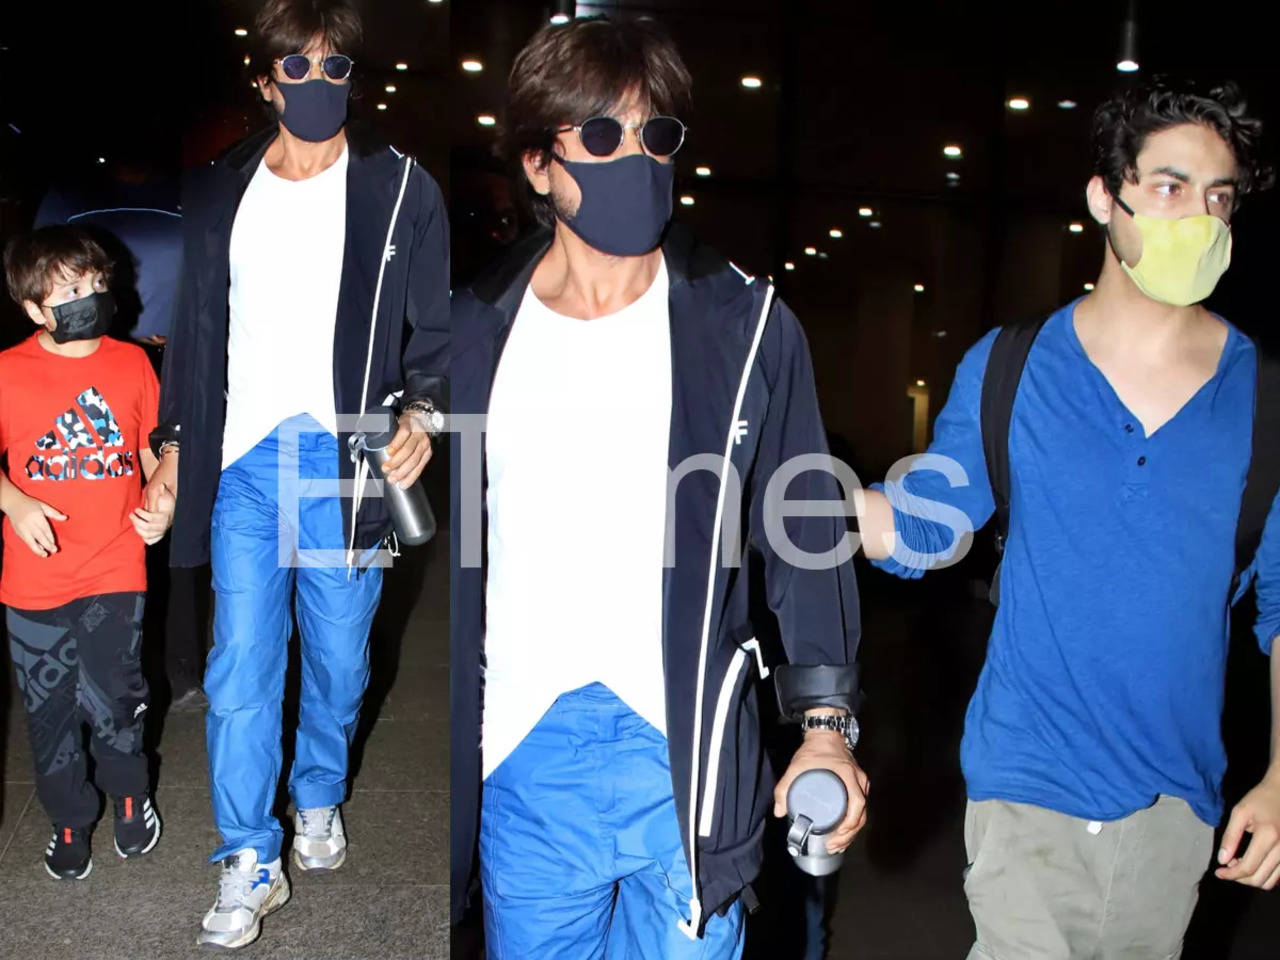 Shah Rukh Khan Greeting Jawan At Airport With Namaste Is The Viral